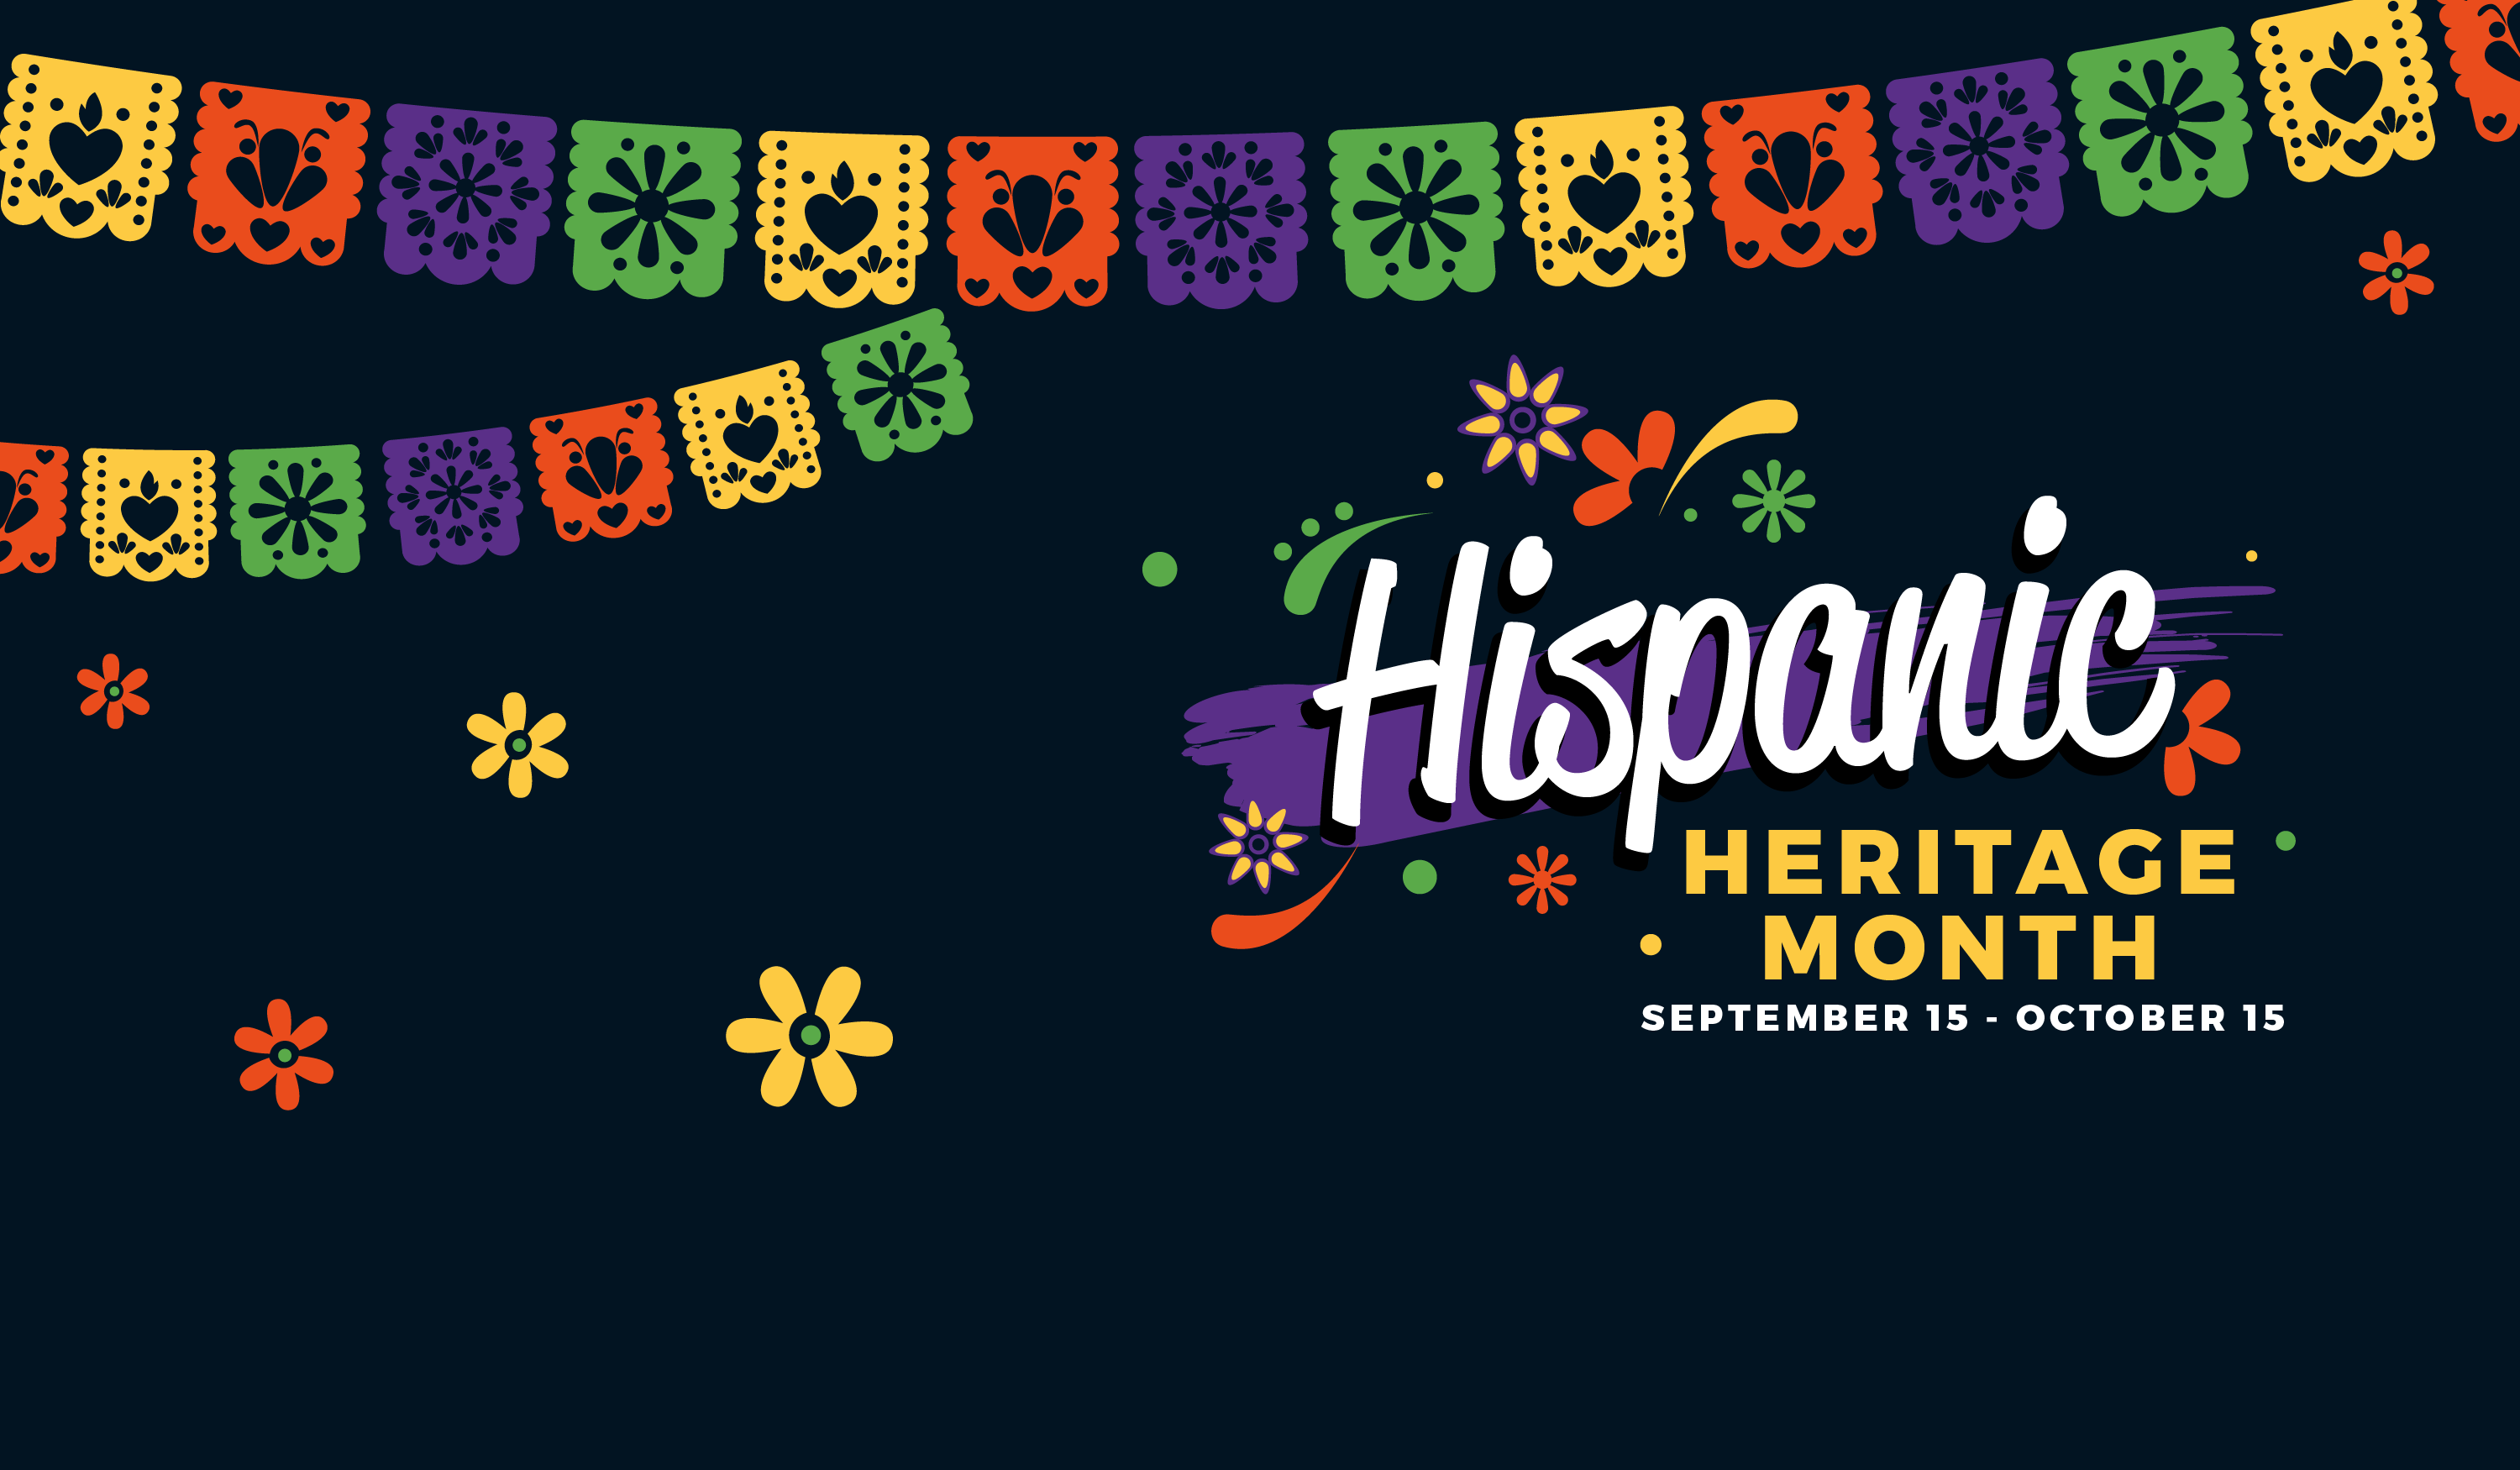 hispanic heritage month september 15 - october 15